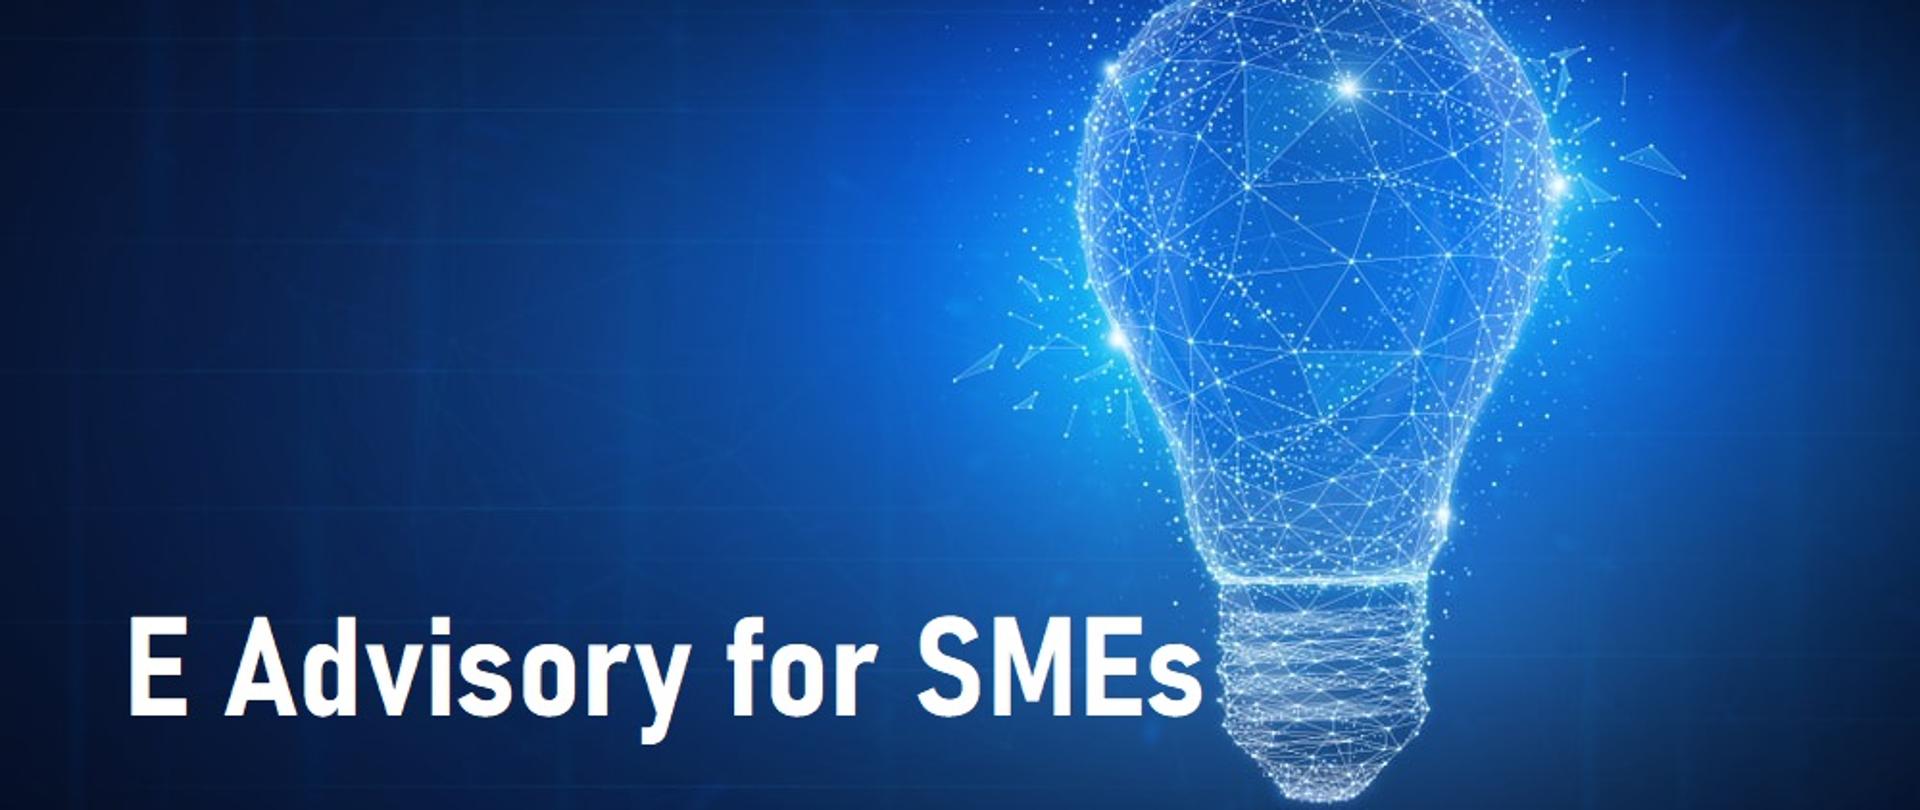 Lightbulb image with title E Advisory for SMEs